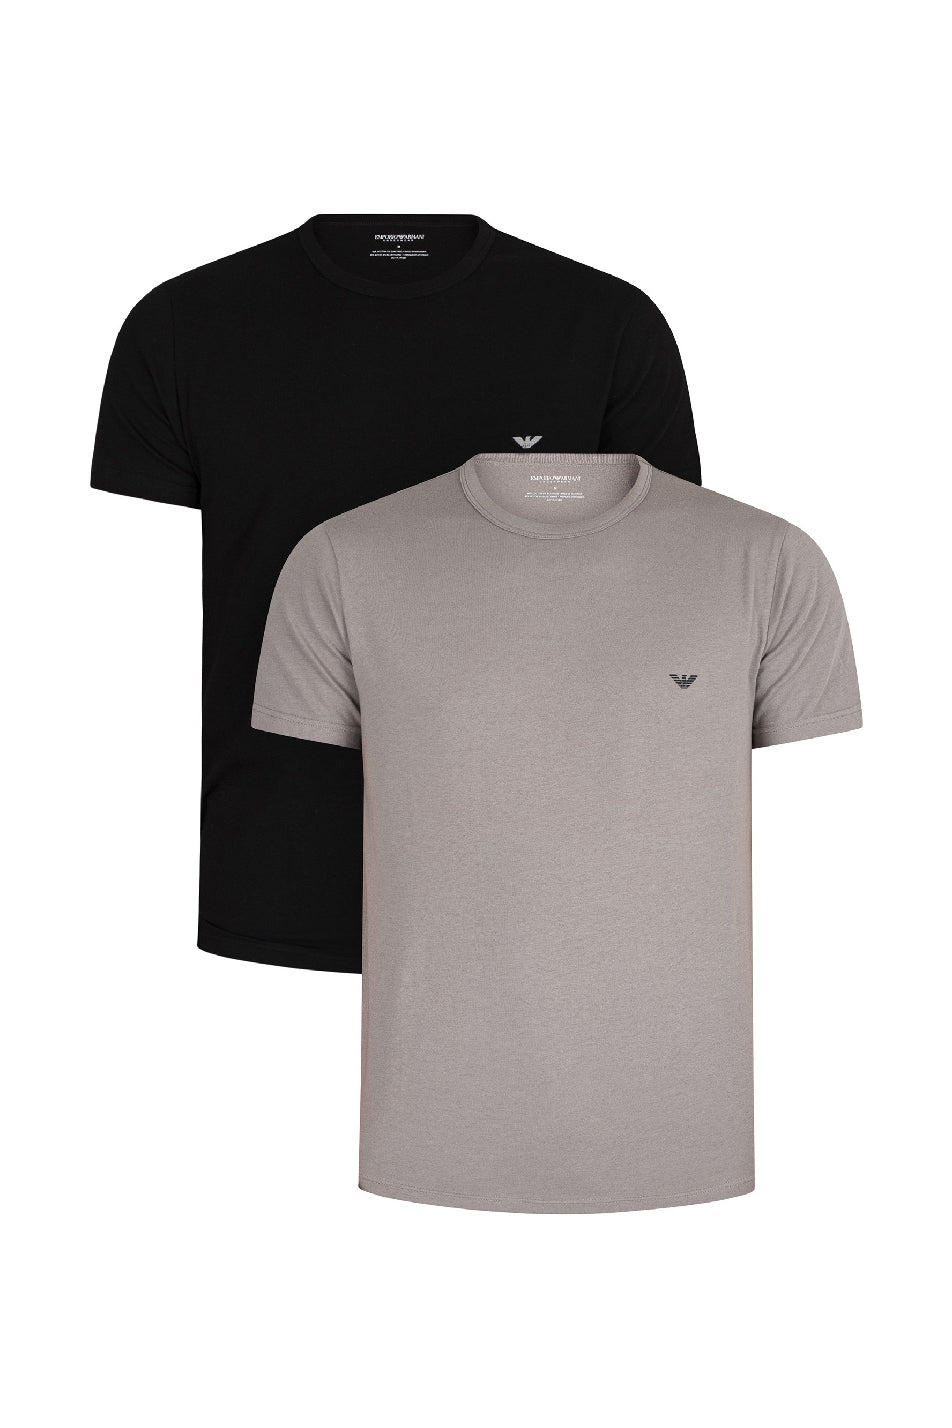 Emporio Armani 2 Pack Men's T-shirt